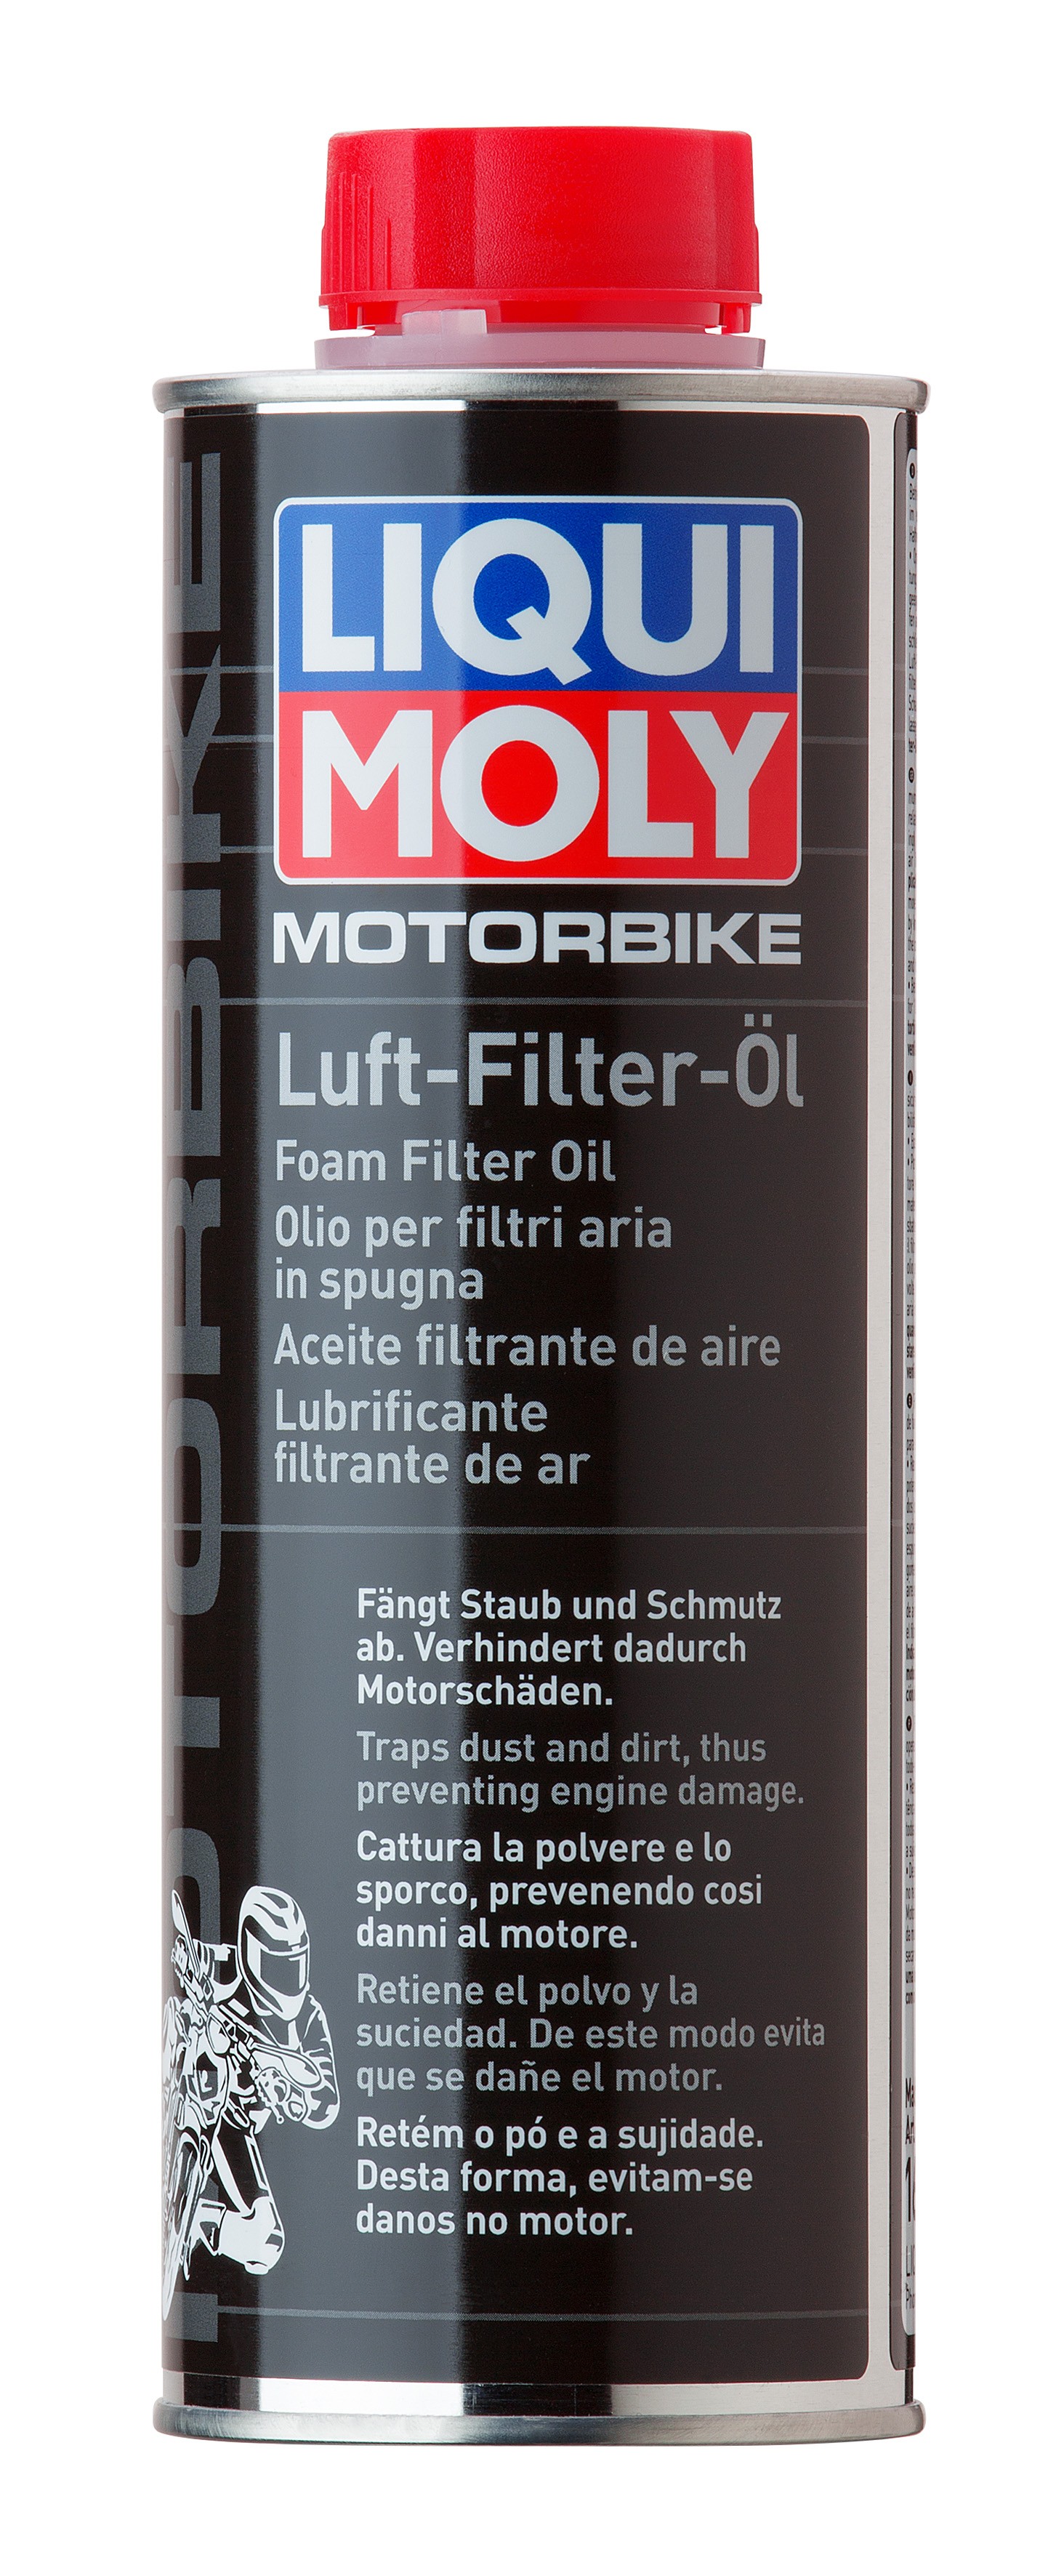 Liqui Moly Motorbike 1625 Luft Filter Öl Foam Filter Oil Luftfilteröl 500 ml